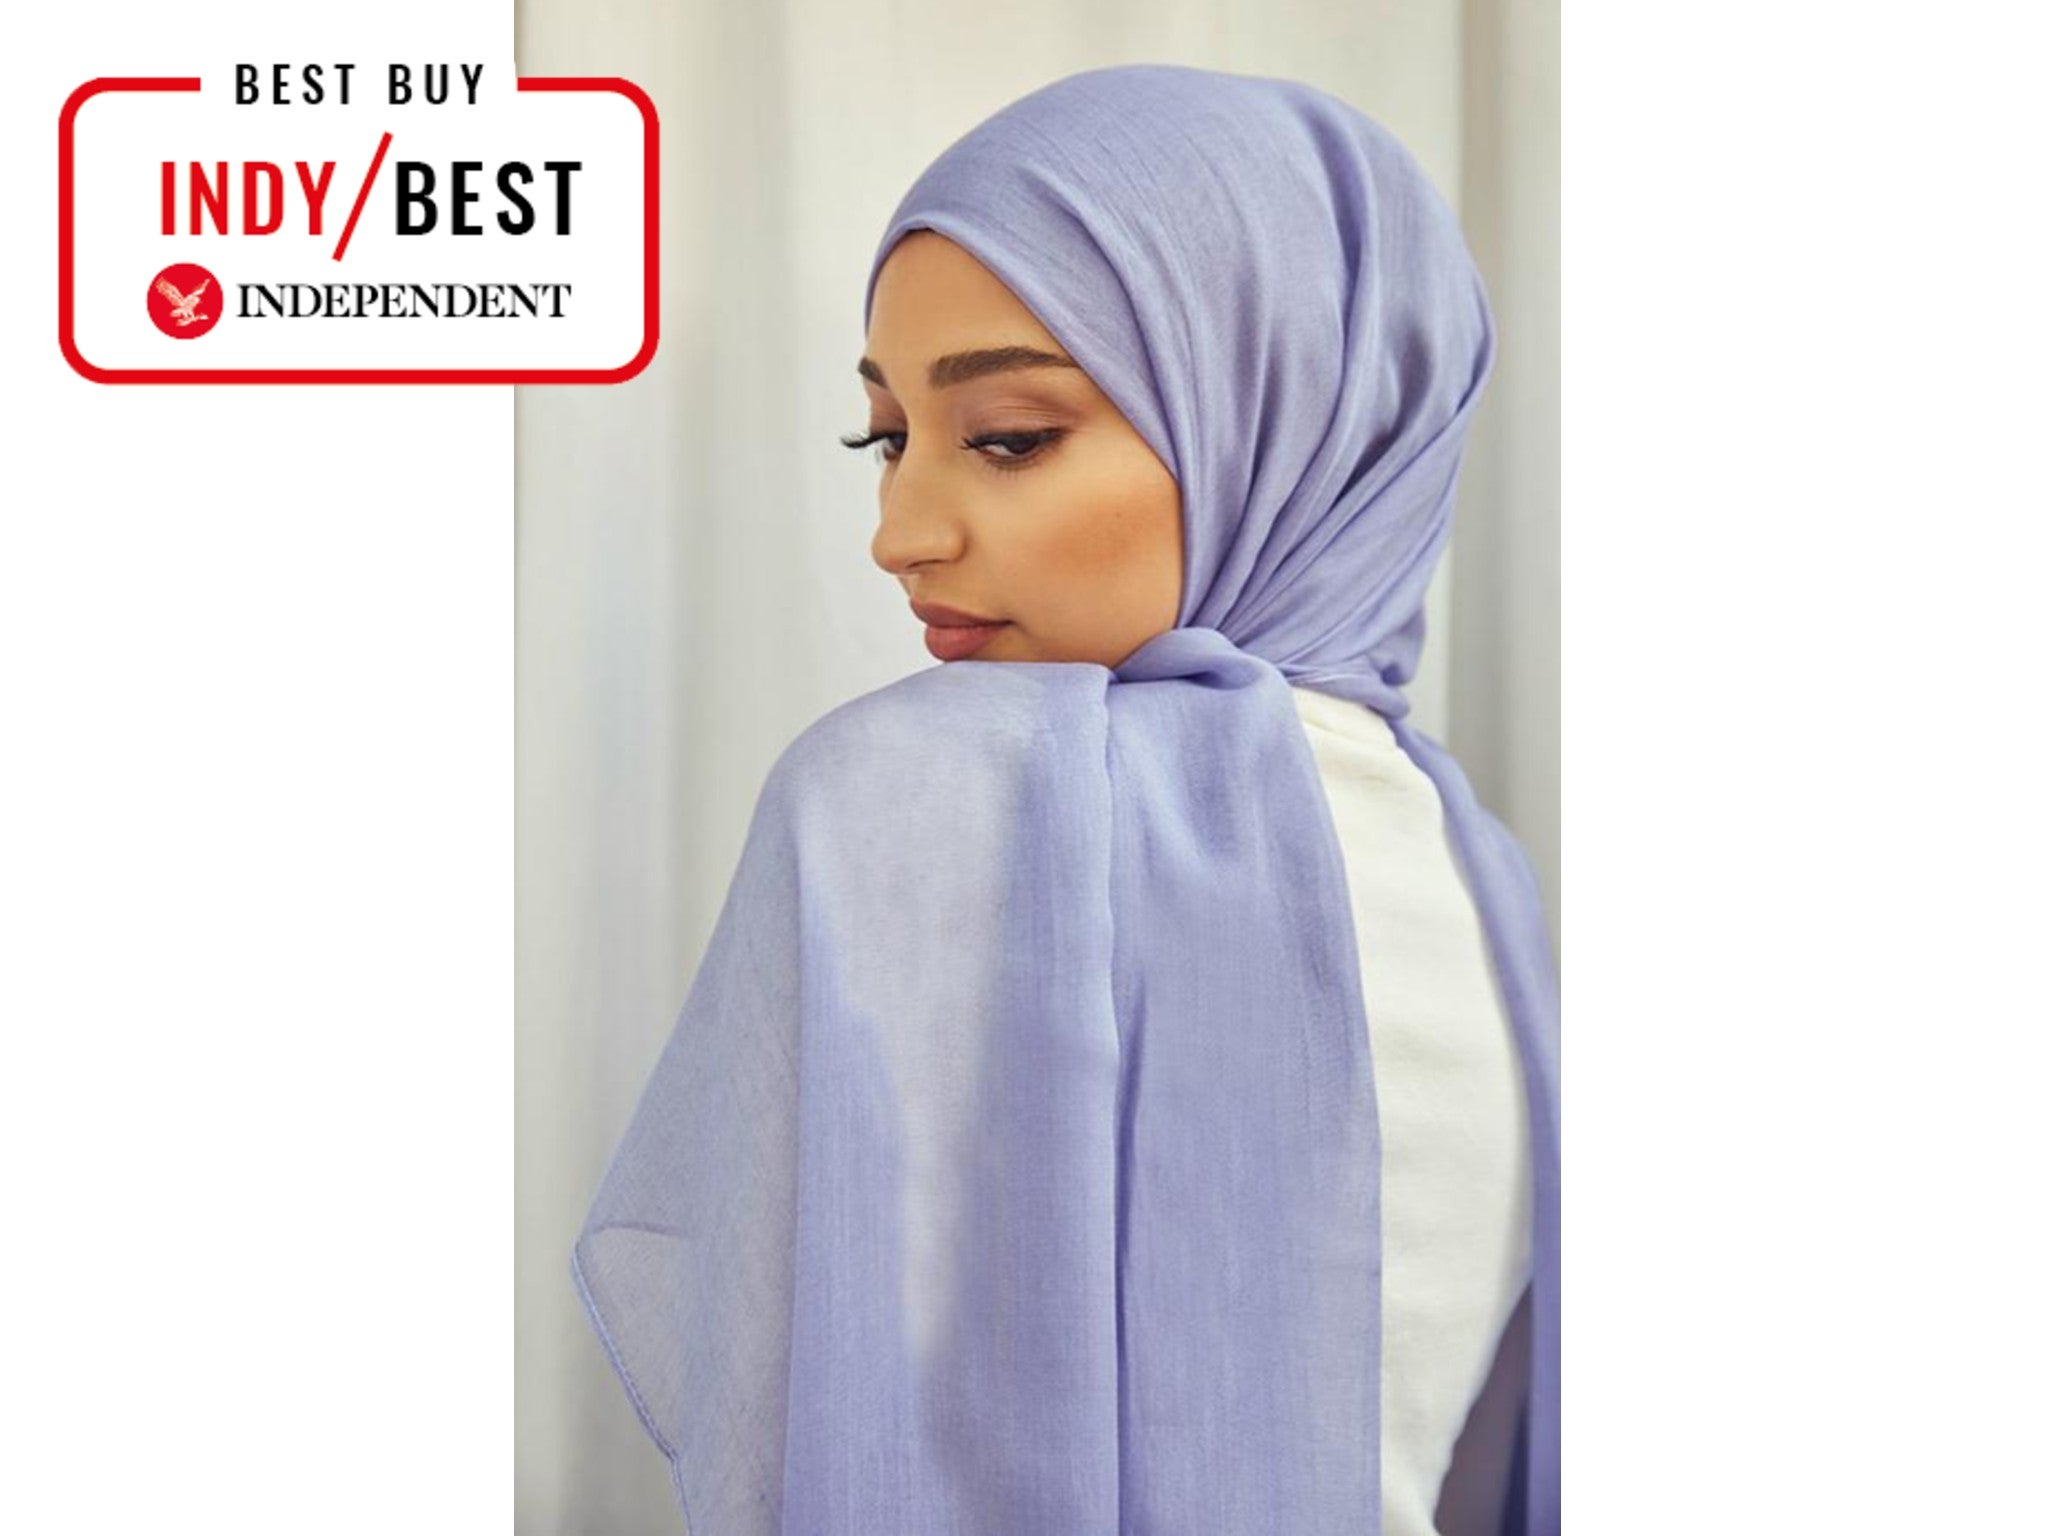 Silq Rose lavender tight weave model hijab indybest.jpeg